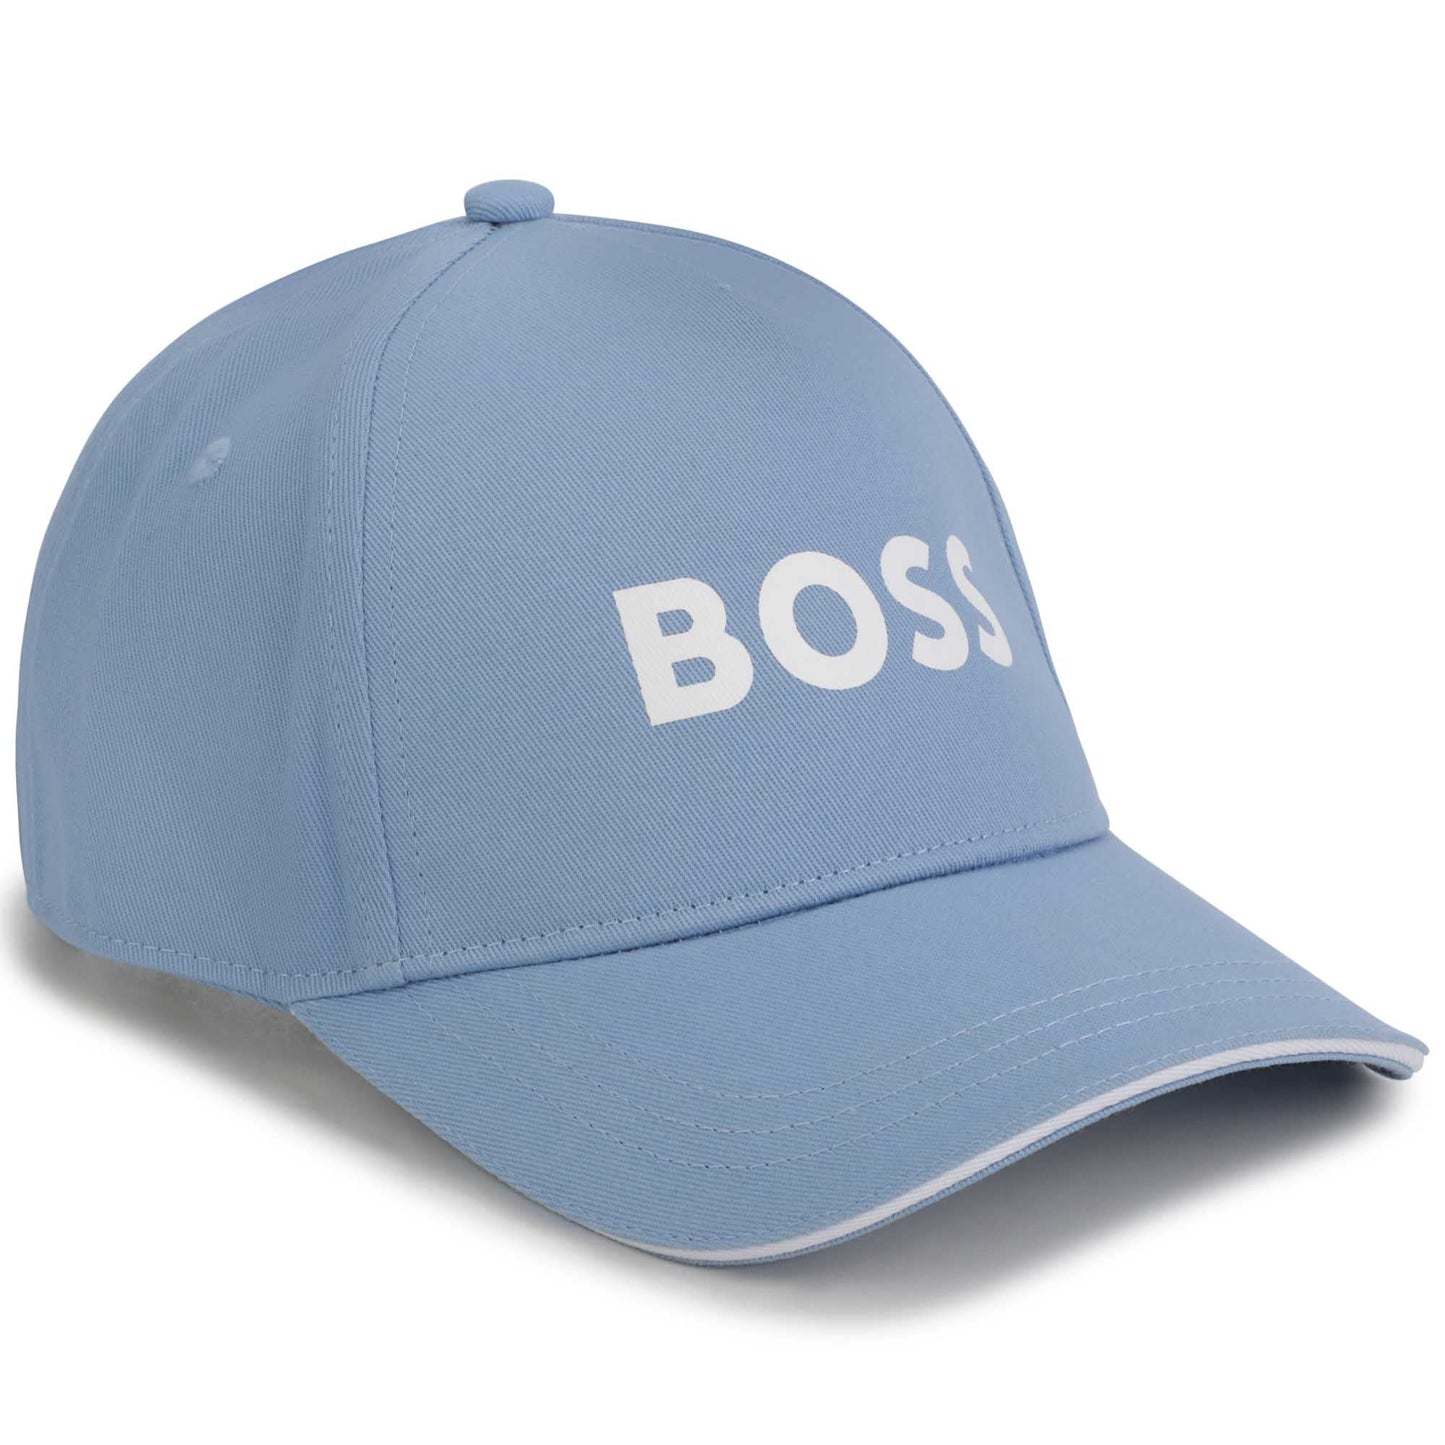 Hugo Boss Boys Baseball Cap_ Pale Blue J21270